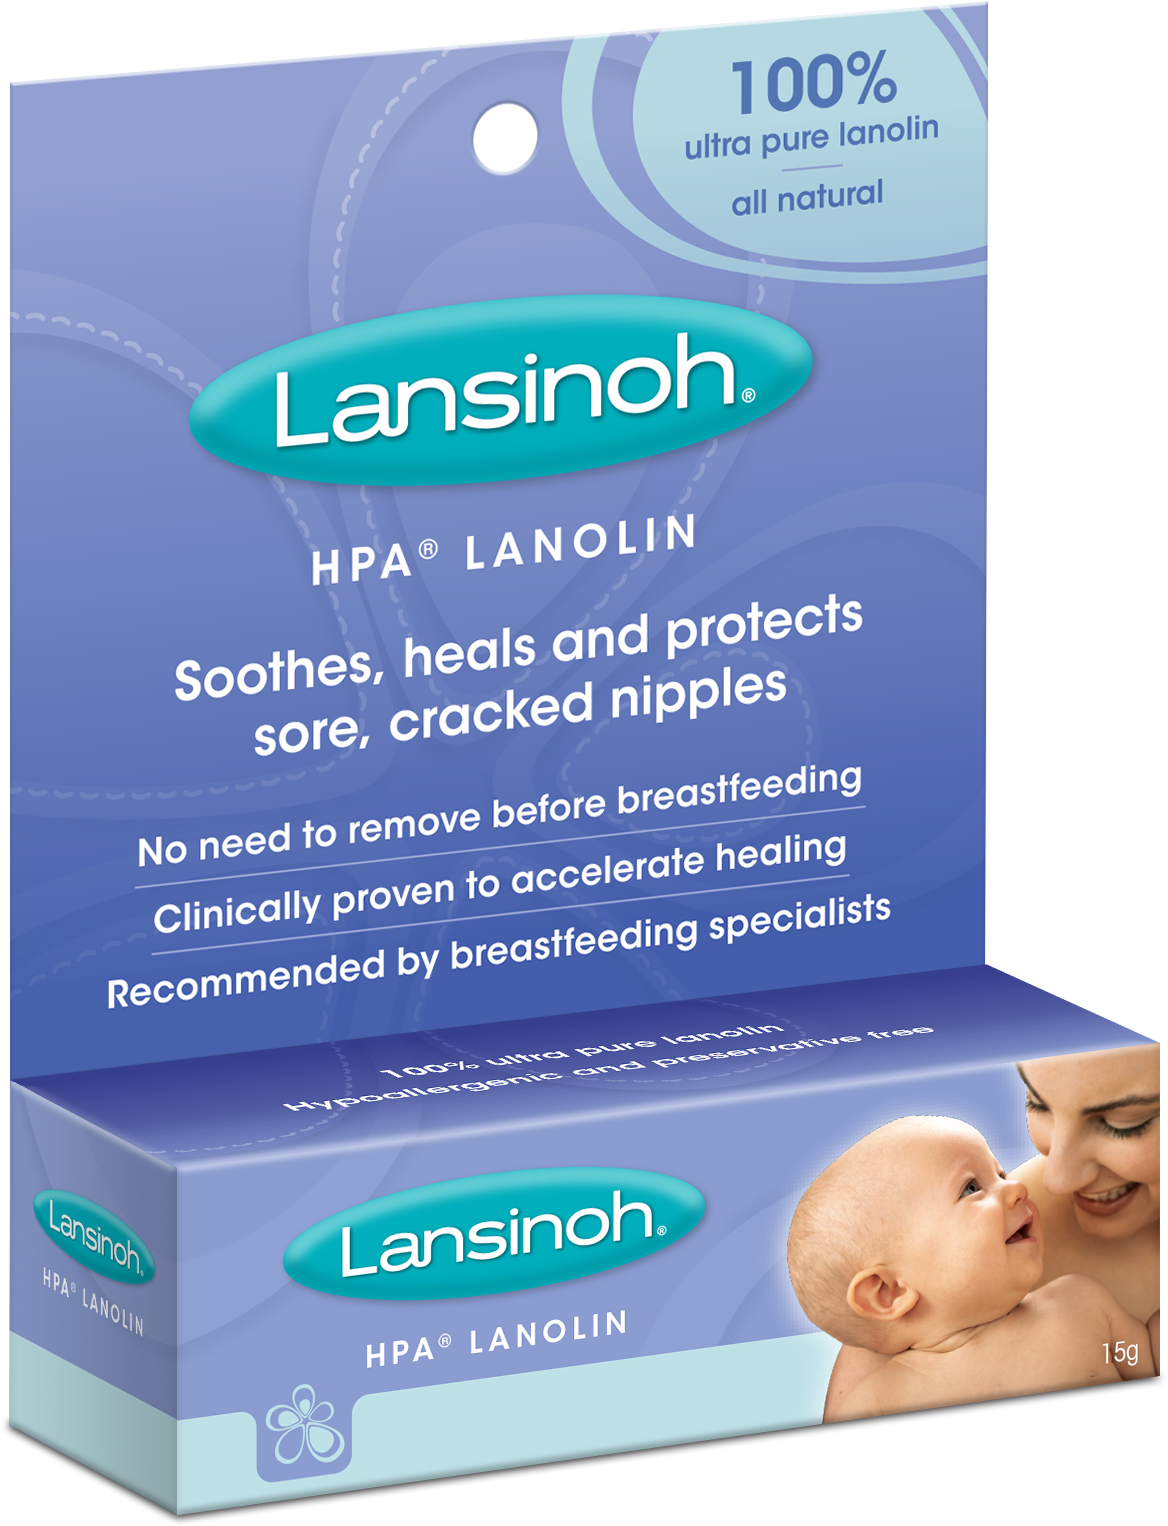 Lansinoh Lanolin Cream Breastfeeding Support PNG